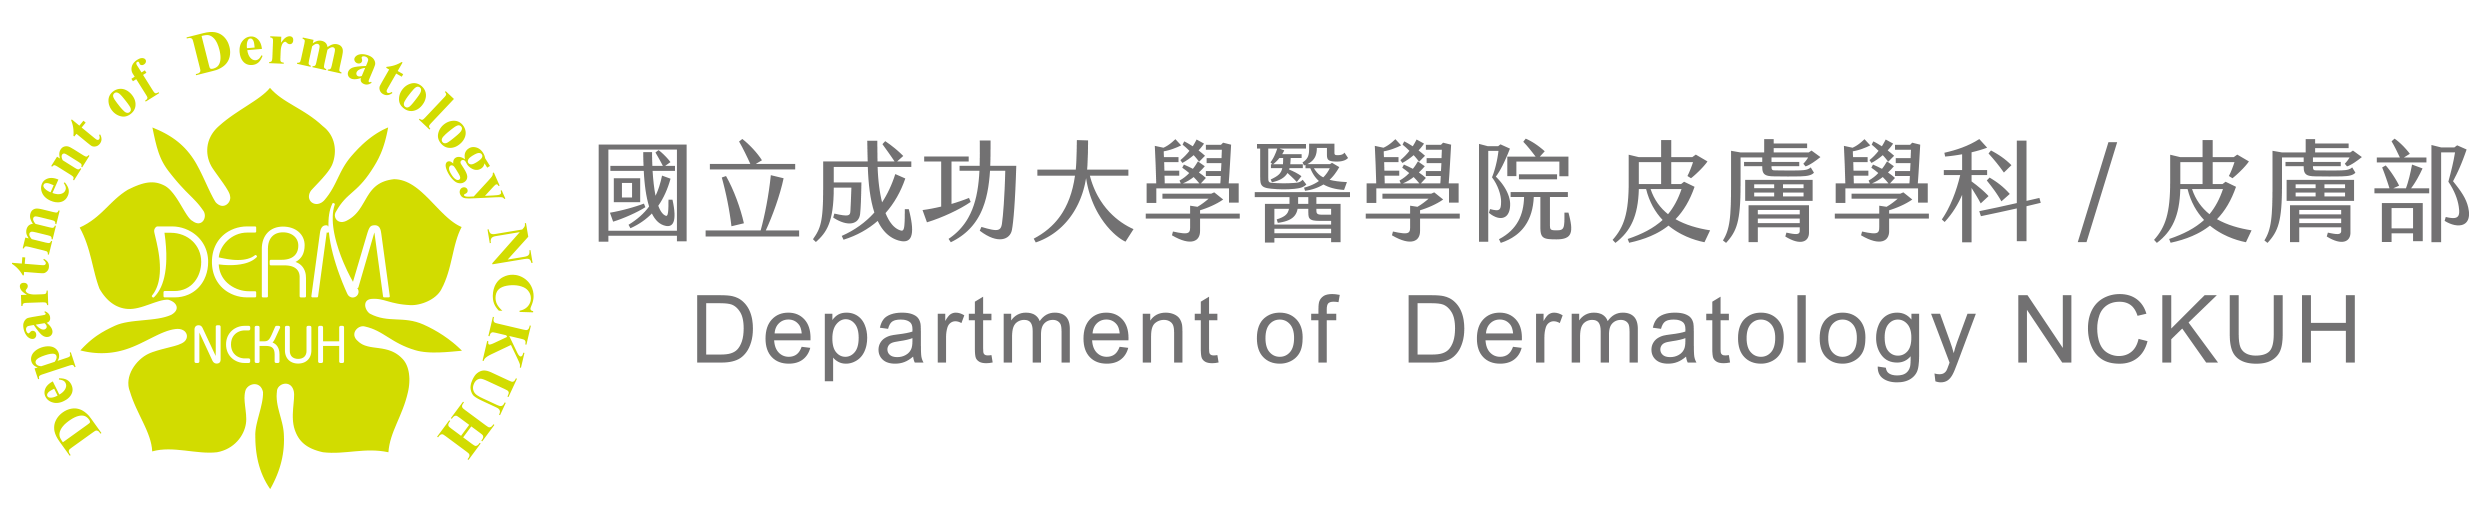 Department of Dermatology NCKUH